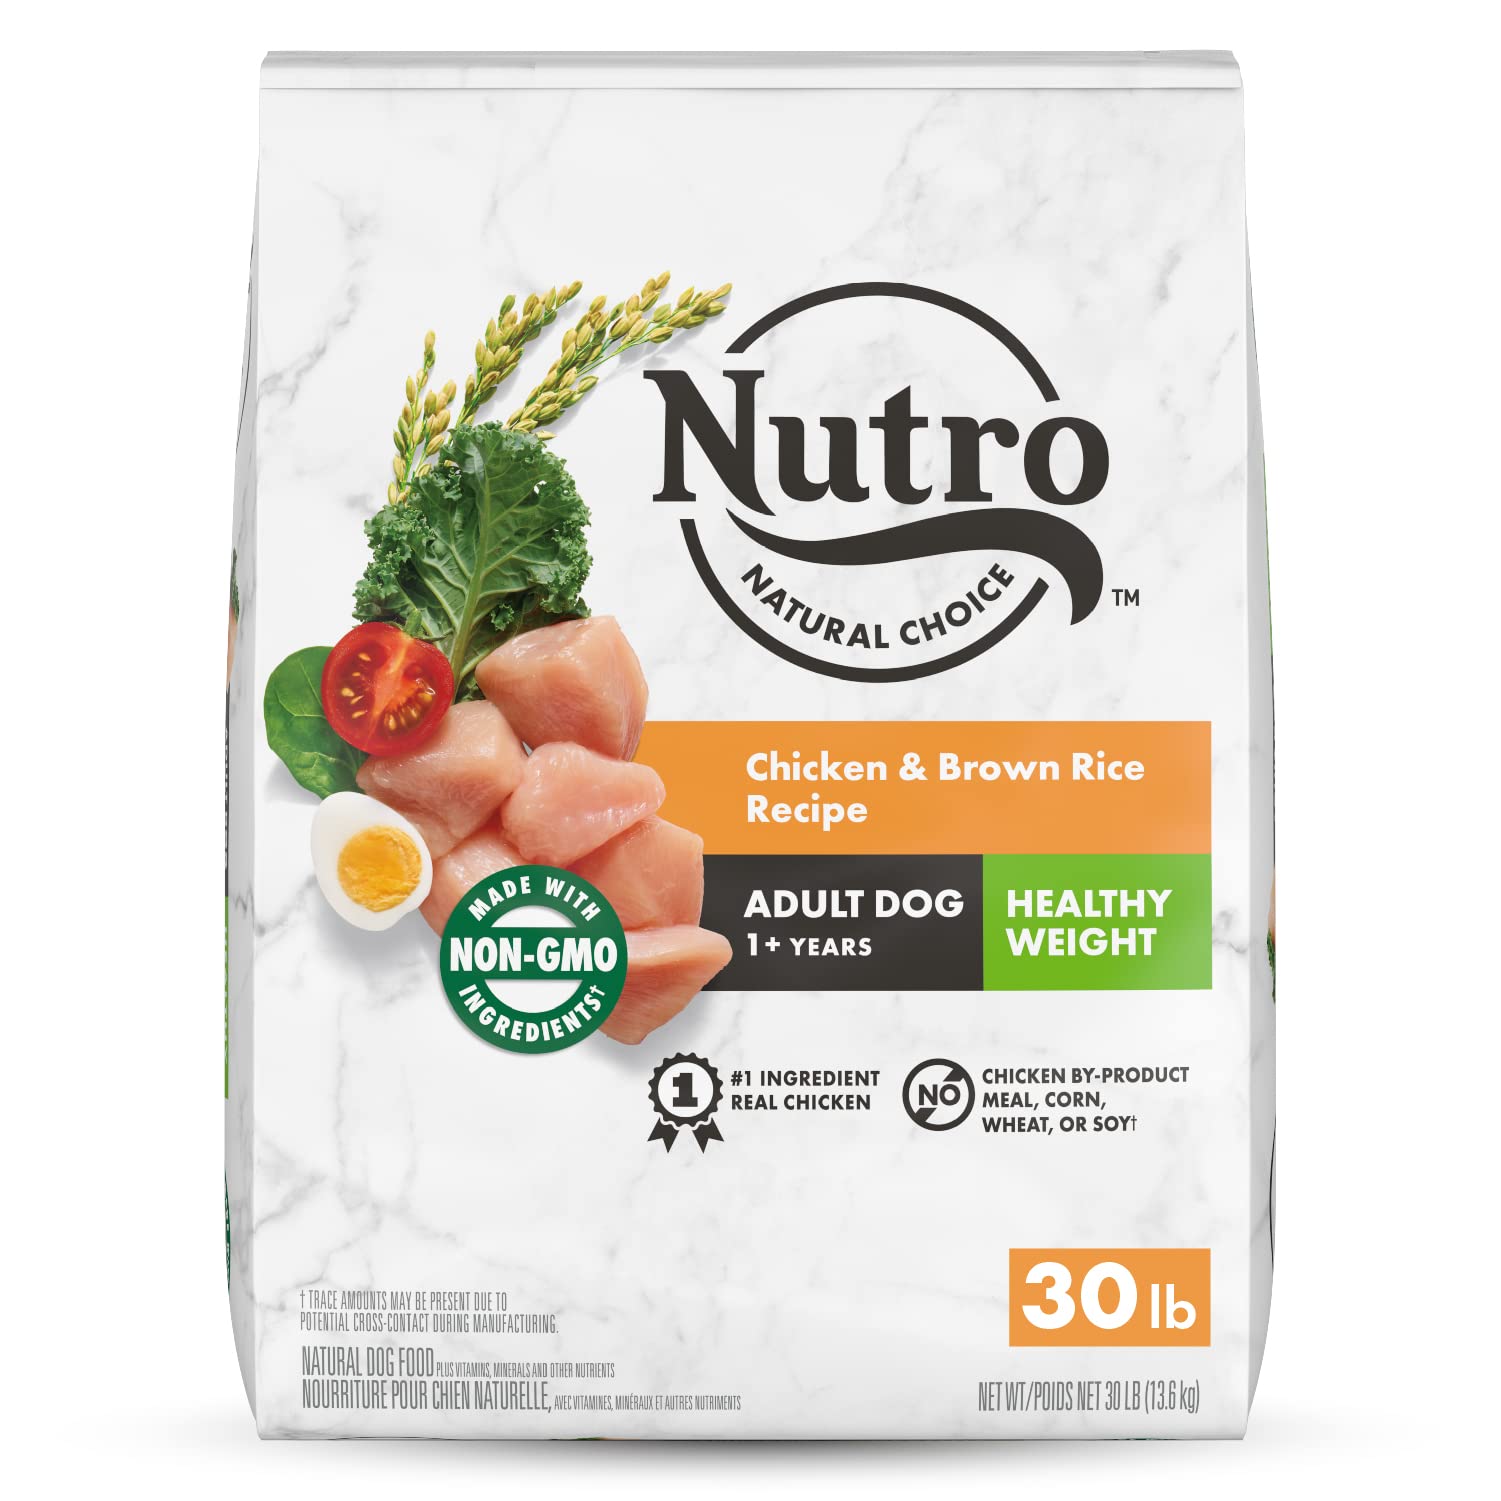 Nutro NATURAL CHOICE 成人健康体重干狗粮，所有品种尺寸，羊肉和鸡肉...